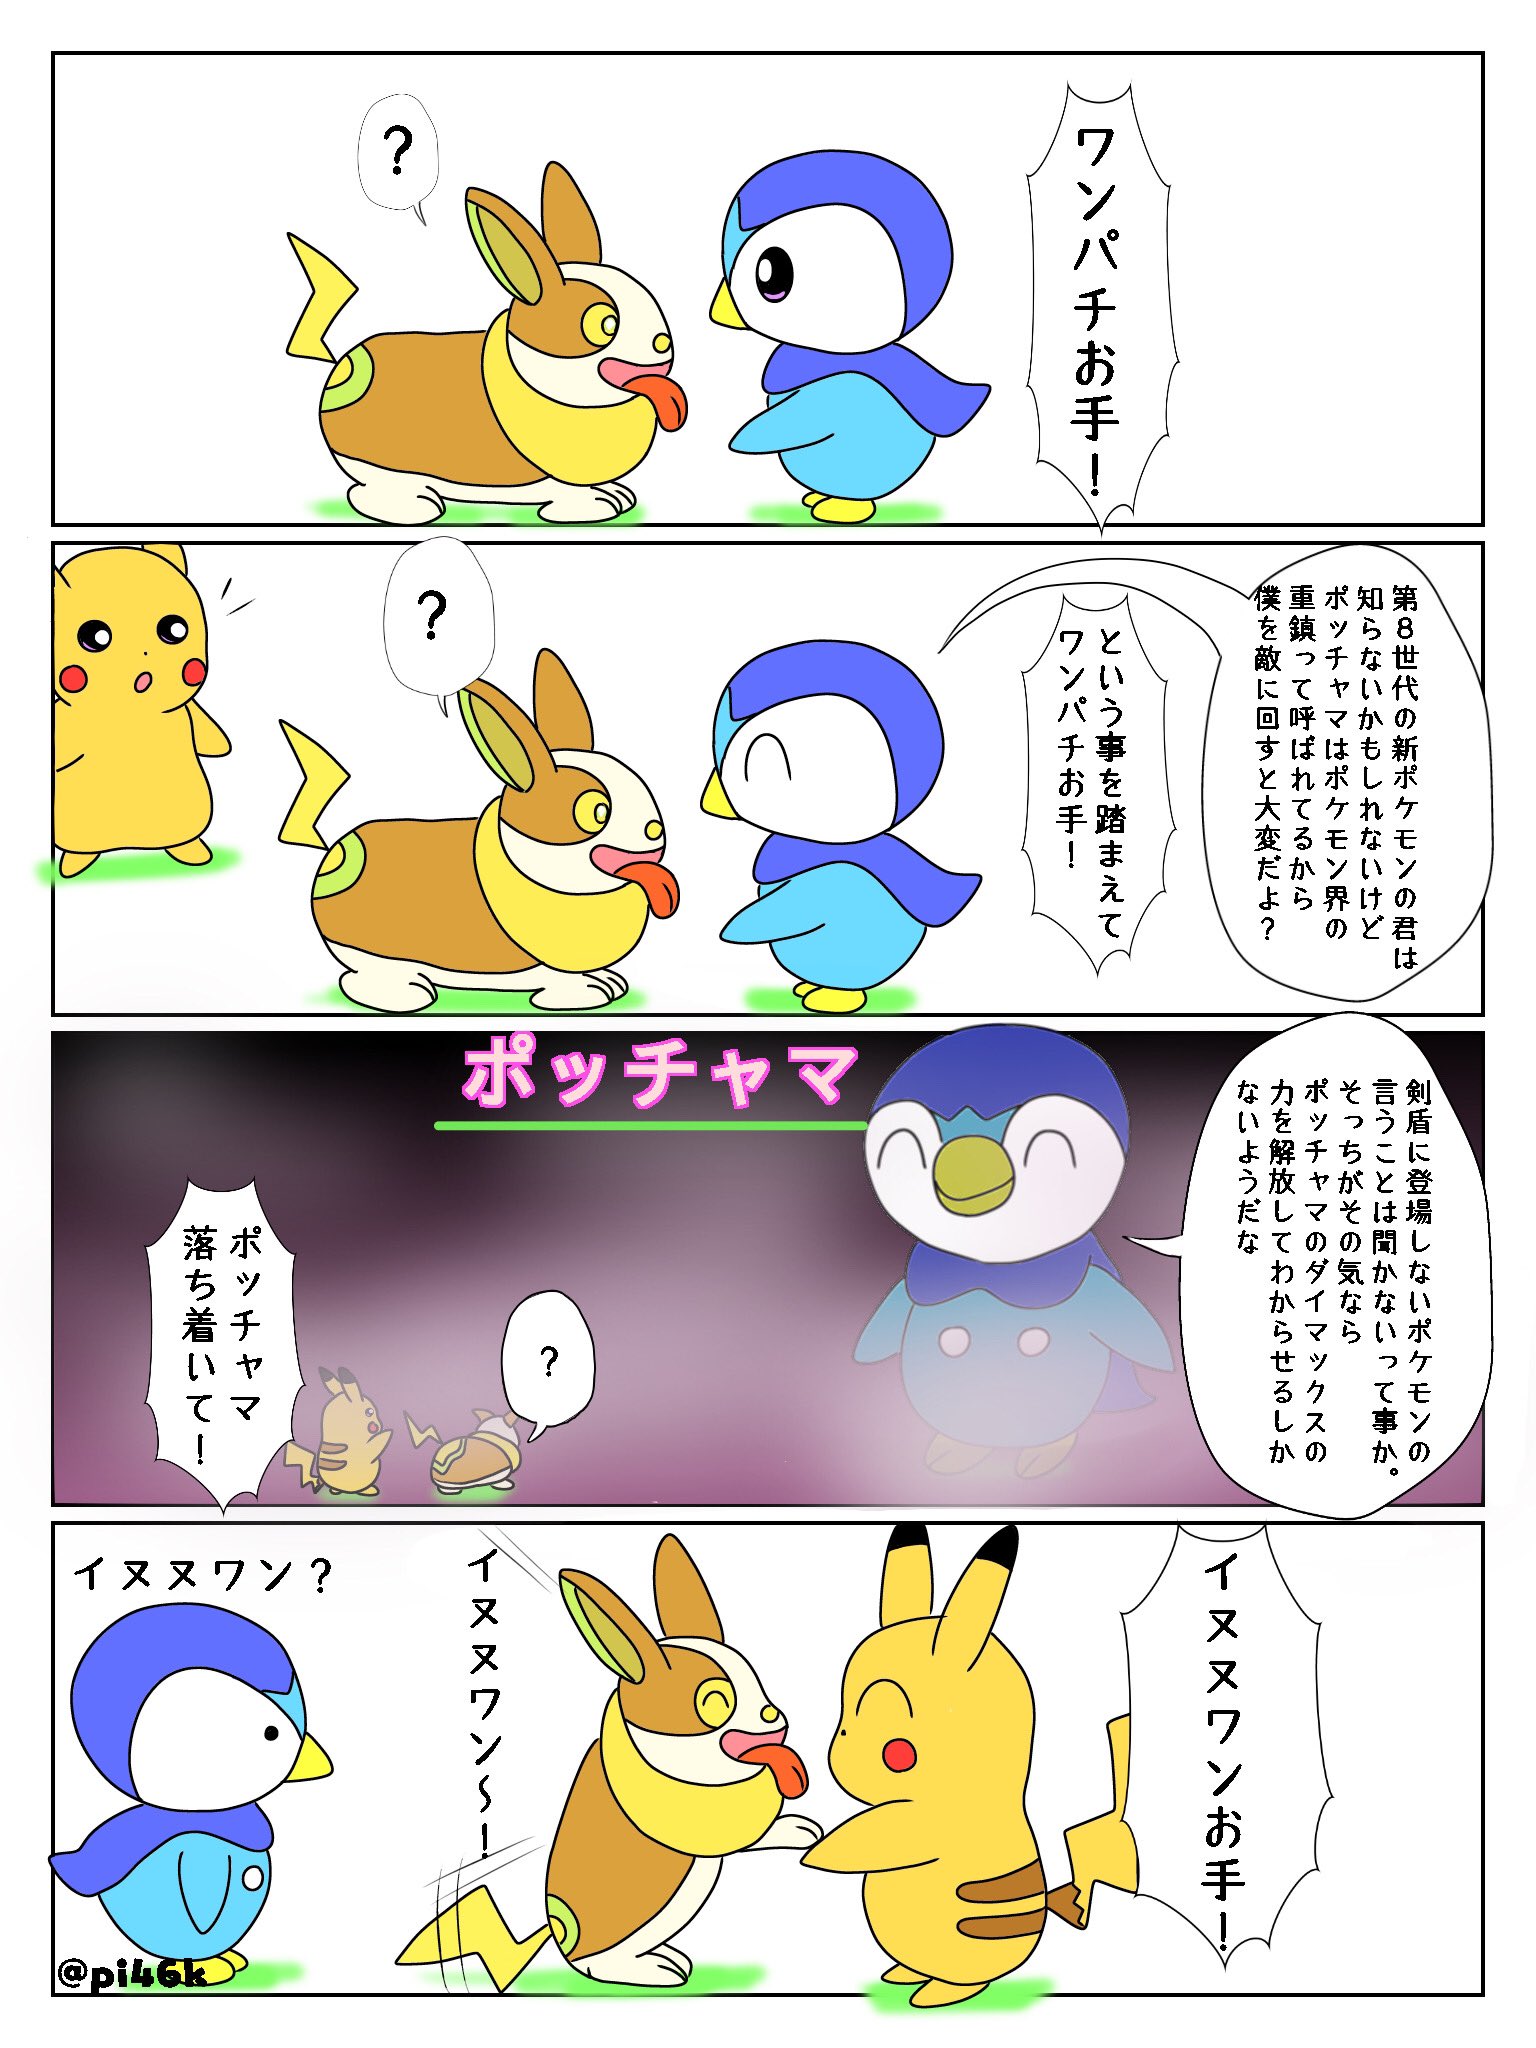 Re ピカチャマ46 在 Twitter 上 年明け最初のイラストはポッチャマとピカチュウとワンパチの漫画です T Co Uzcdvioze6 Twitter